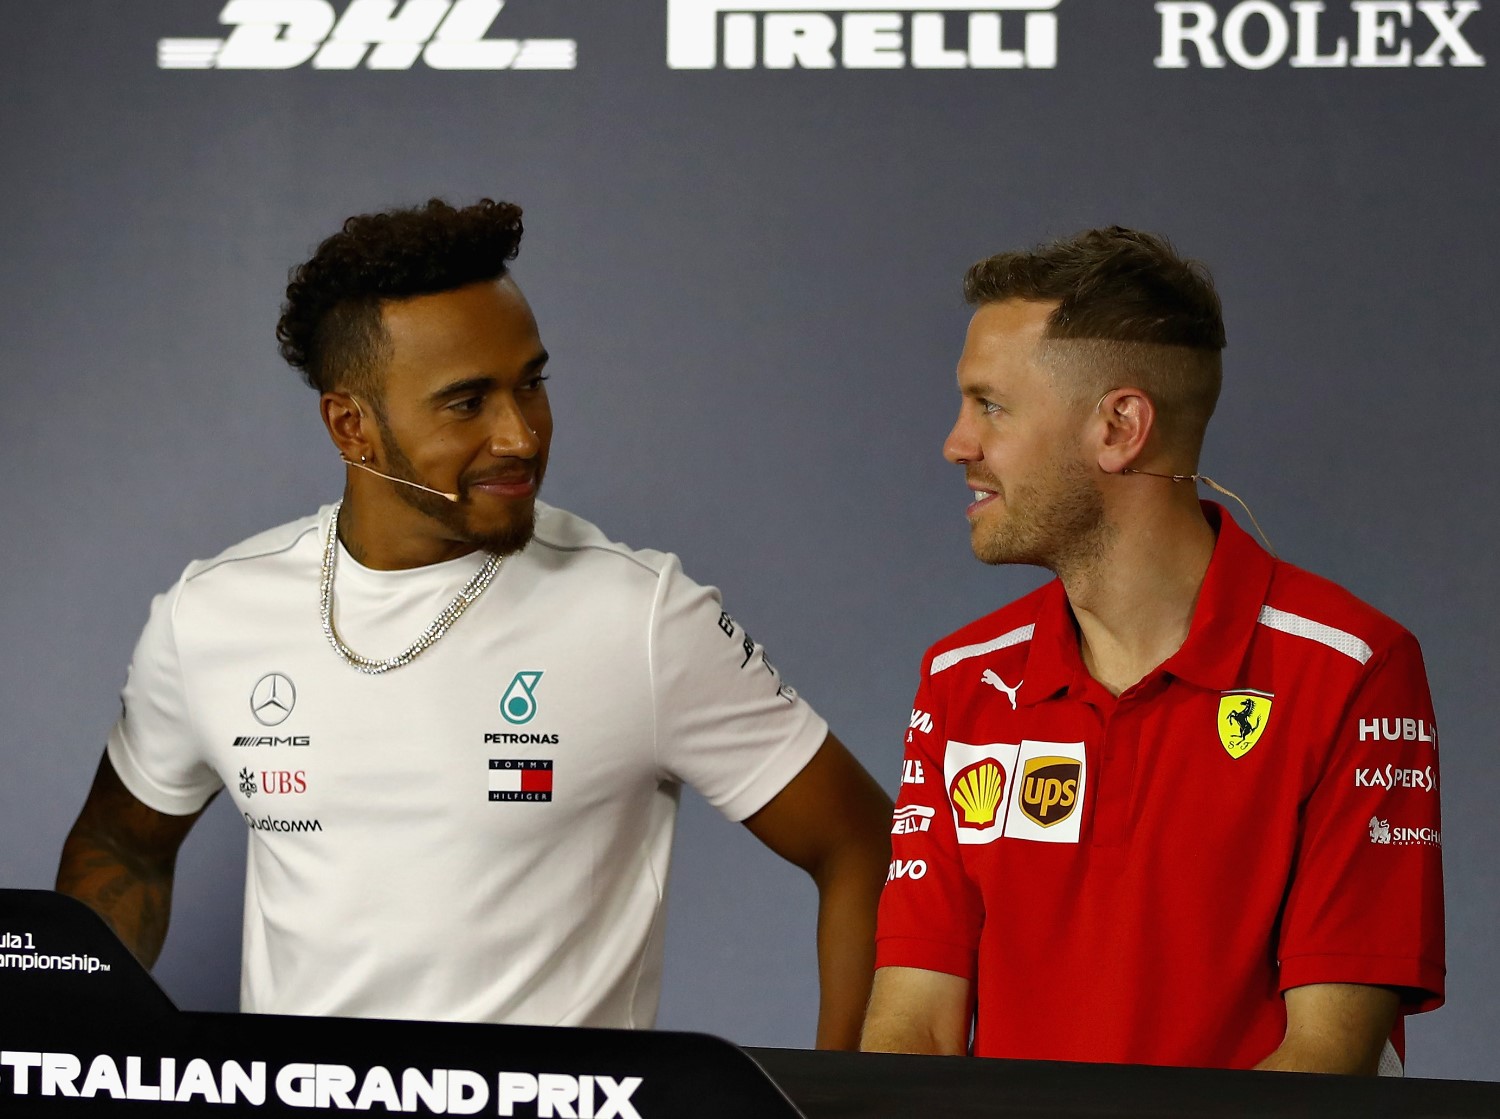 Might Hamilton finish at Ferrari and Vettel at Mercedes (German driving for German team)?